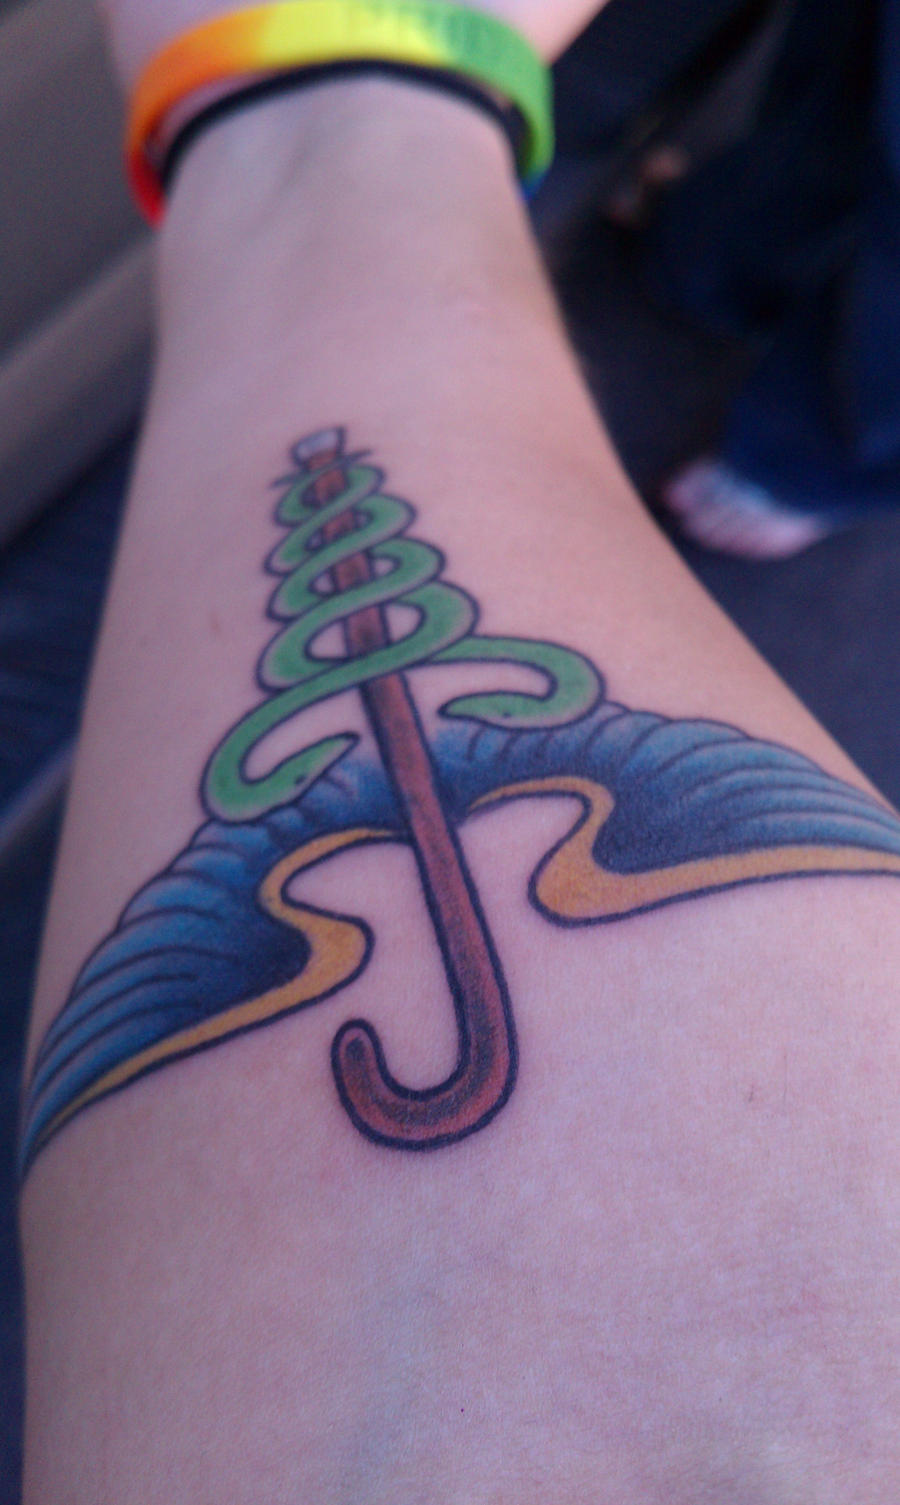 Snakes on a Cane tattoo/ Caduceus by Karirae2010 on DeviantArt